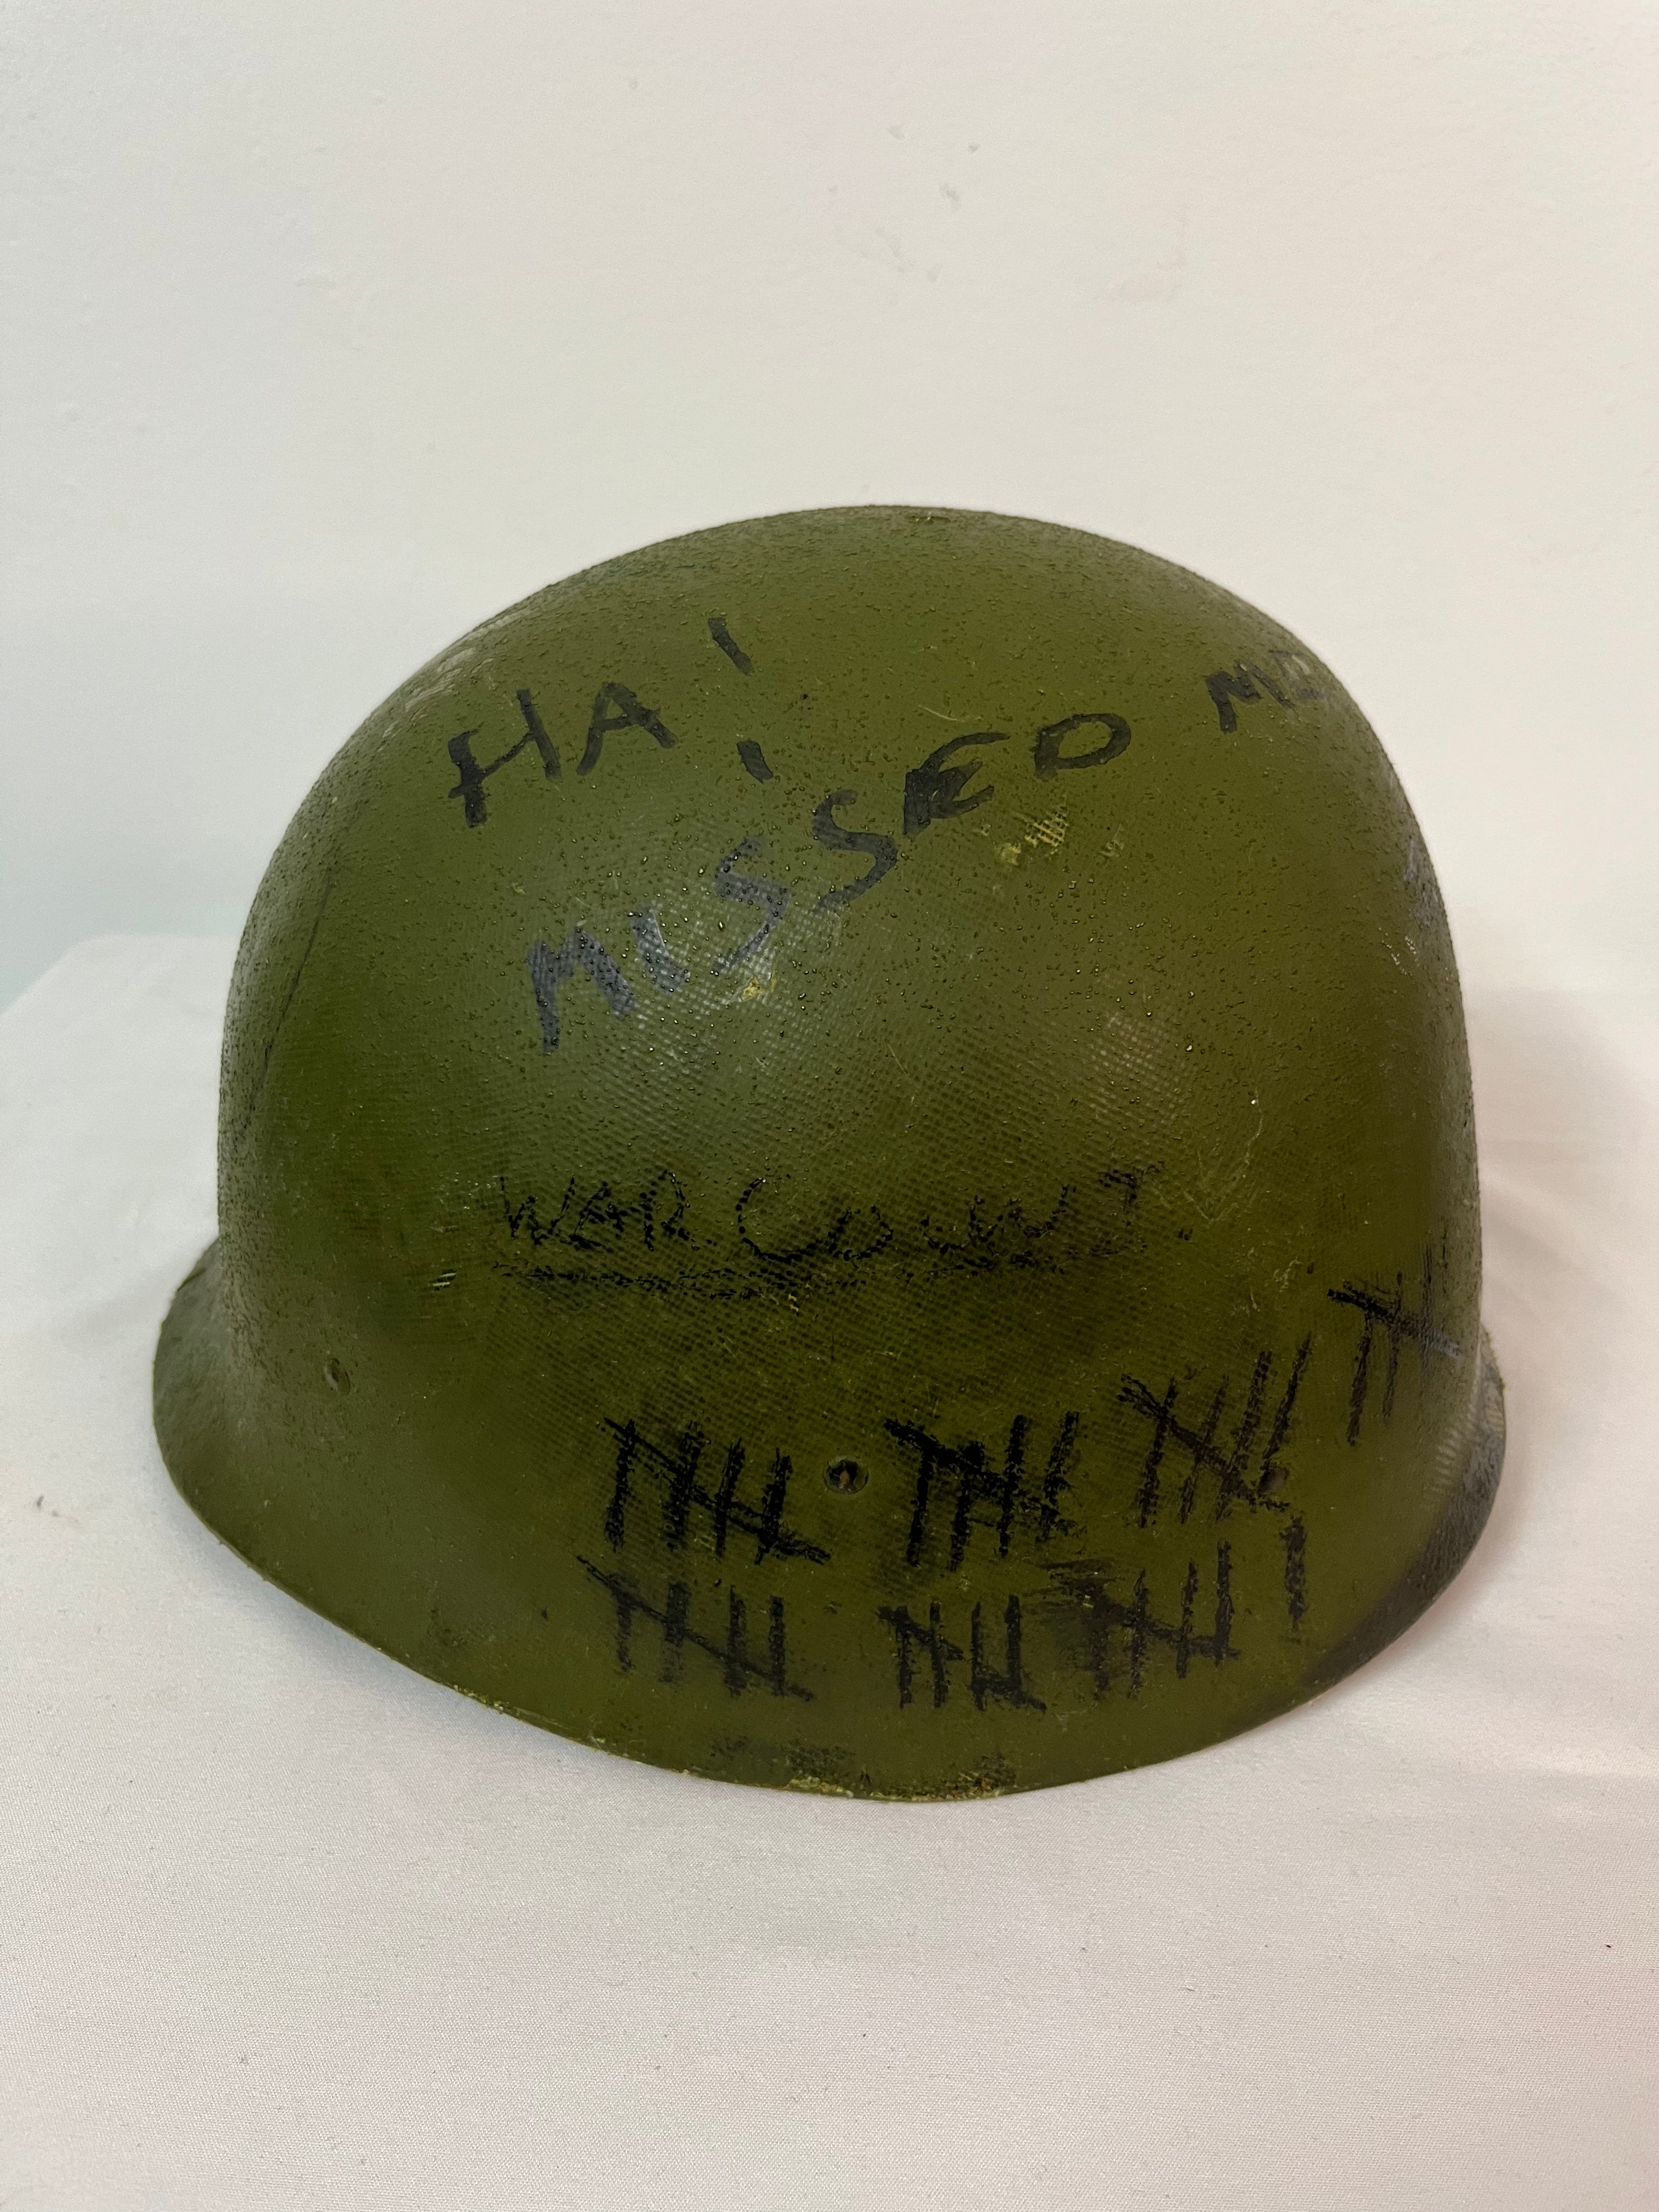 Military Helmet - Punk/Hippie Helmet 1970s Vietnam Era - 'Ha - Missed Me'